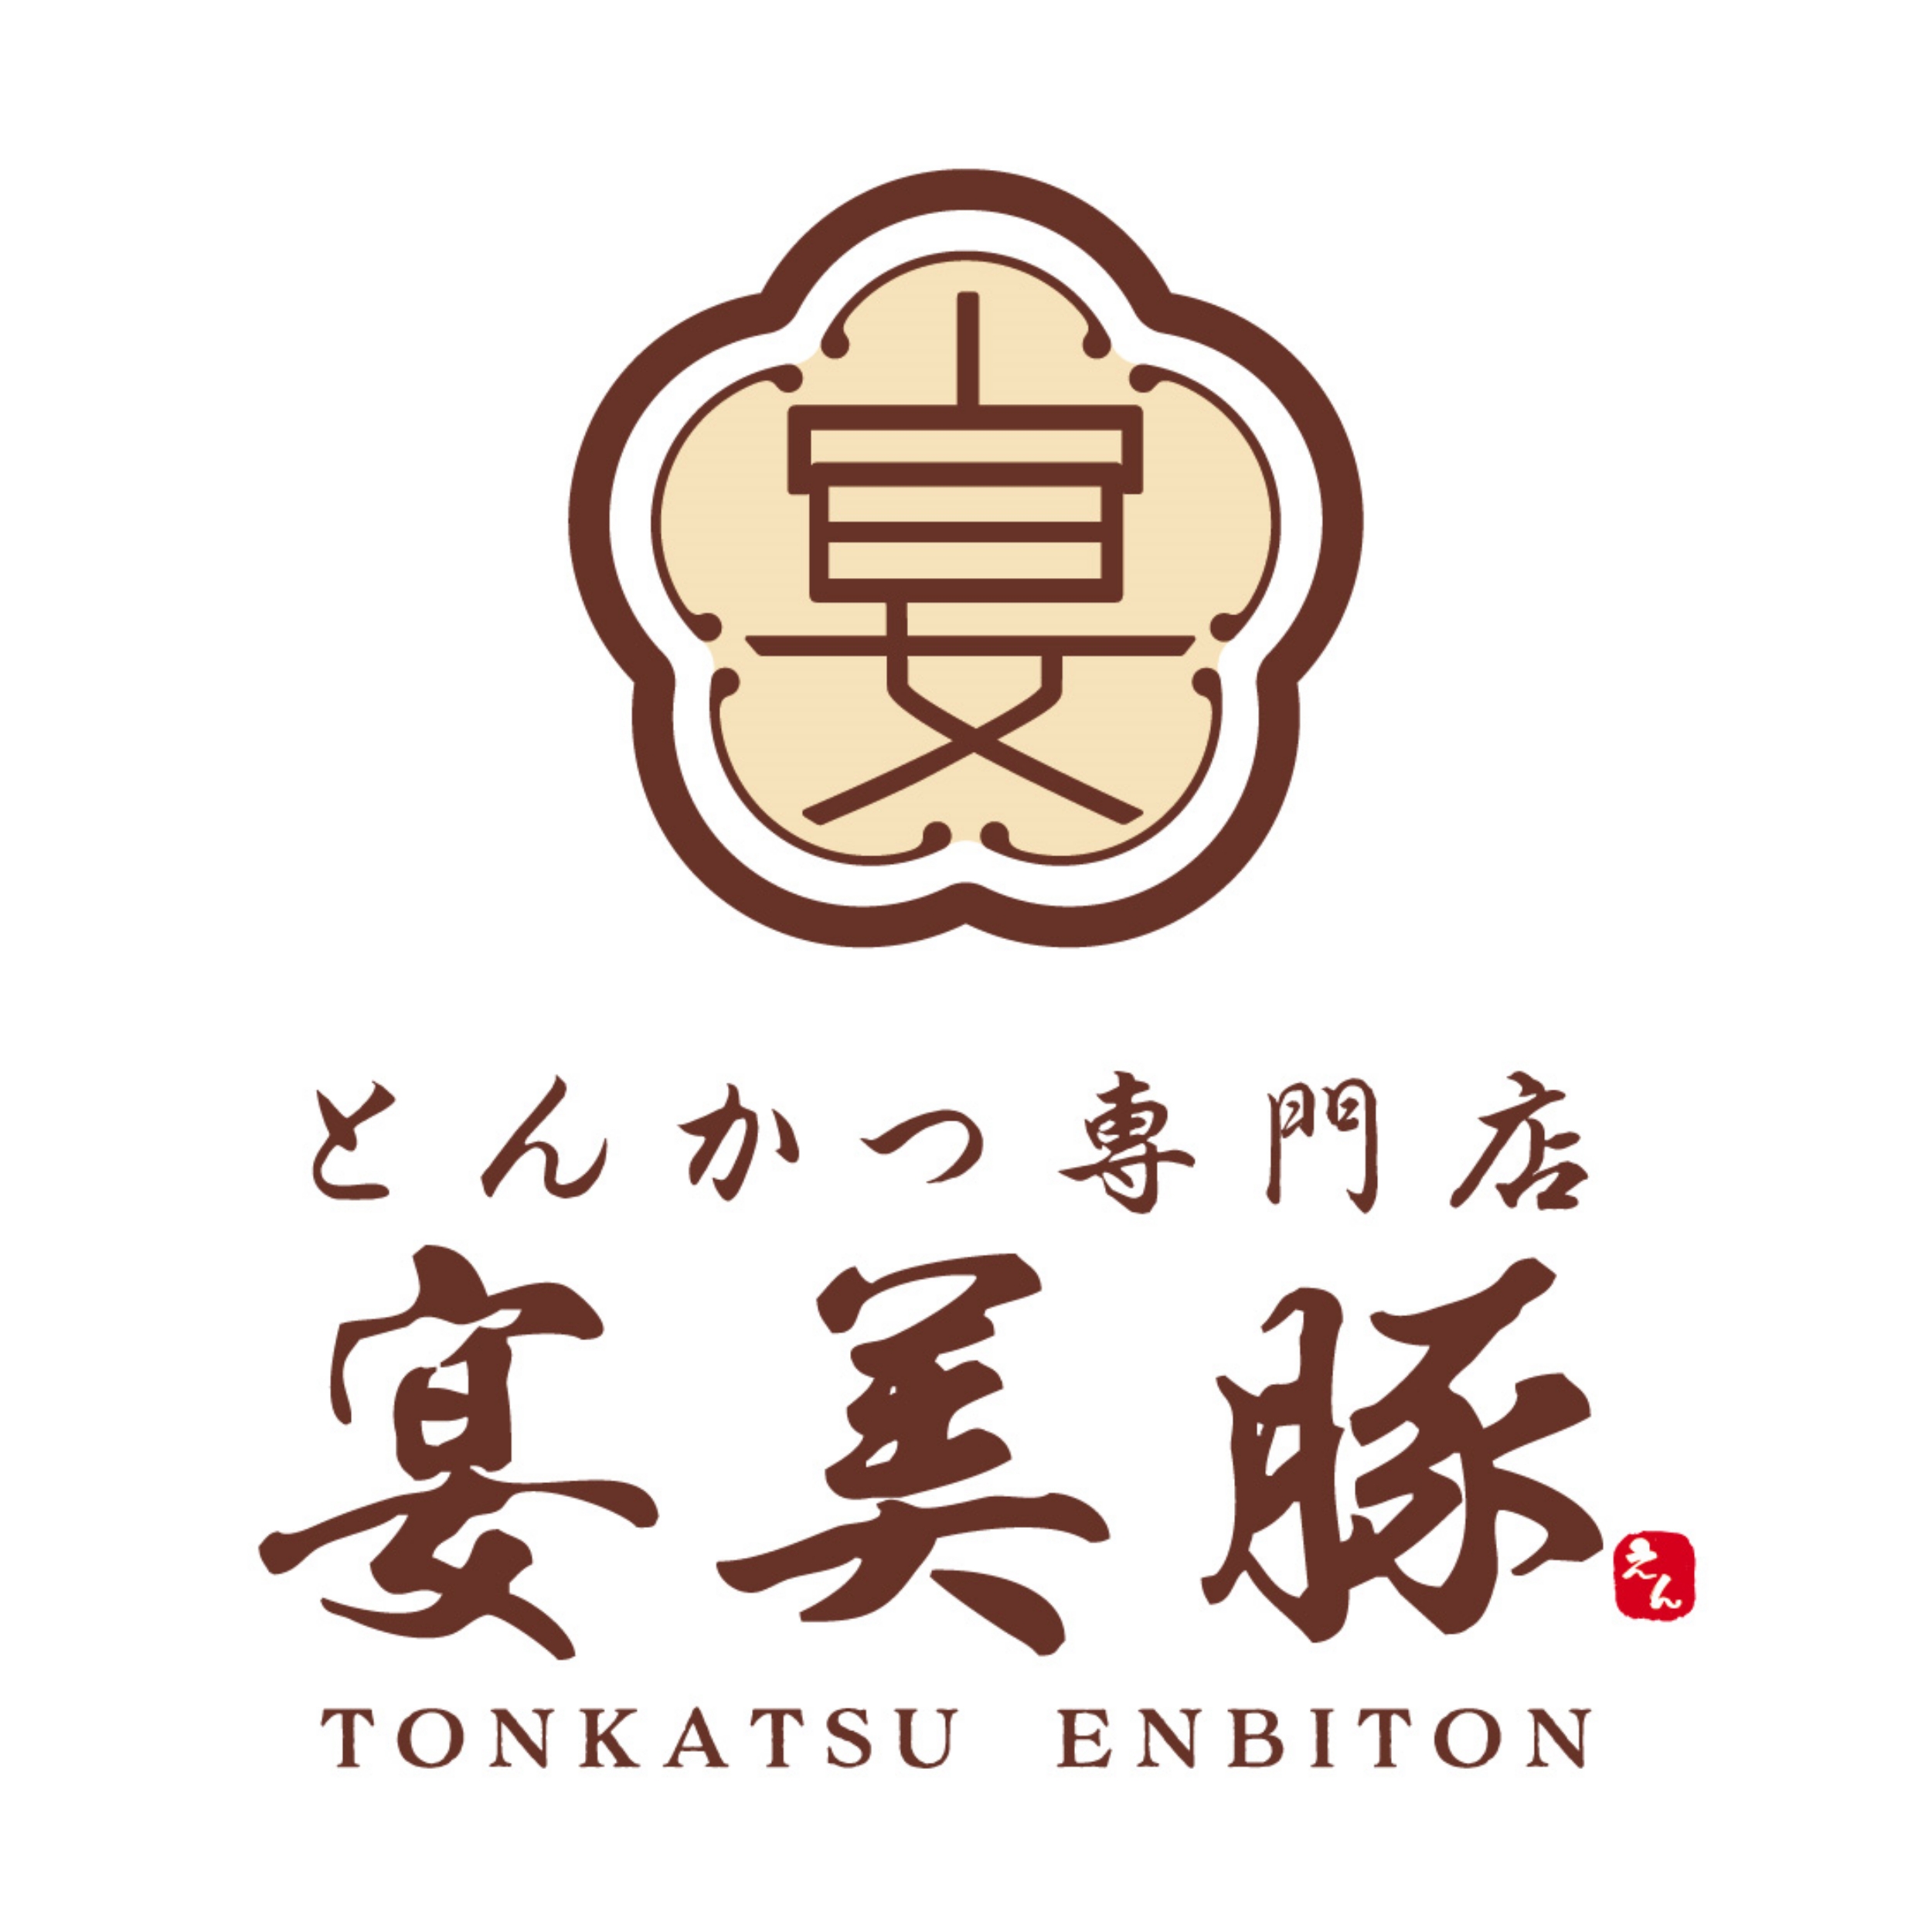 Tonkatsu Enbiton_Logo_variation-01_2500px.jpg